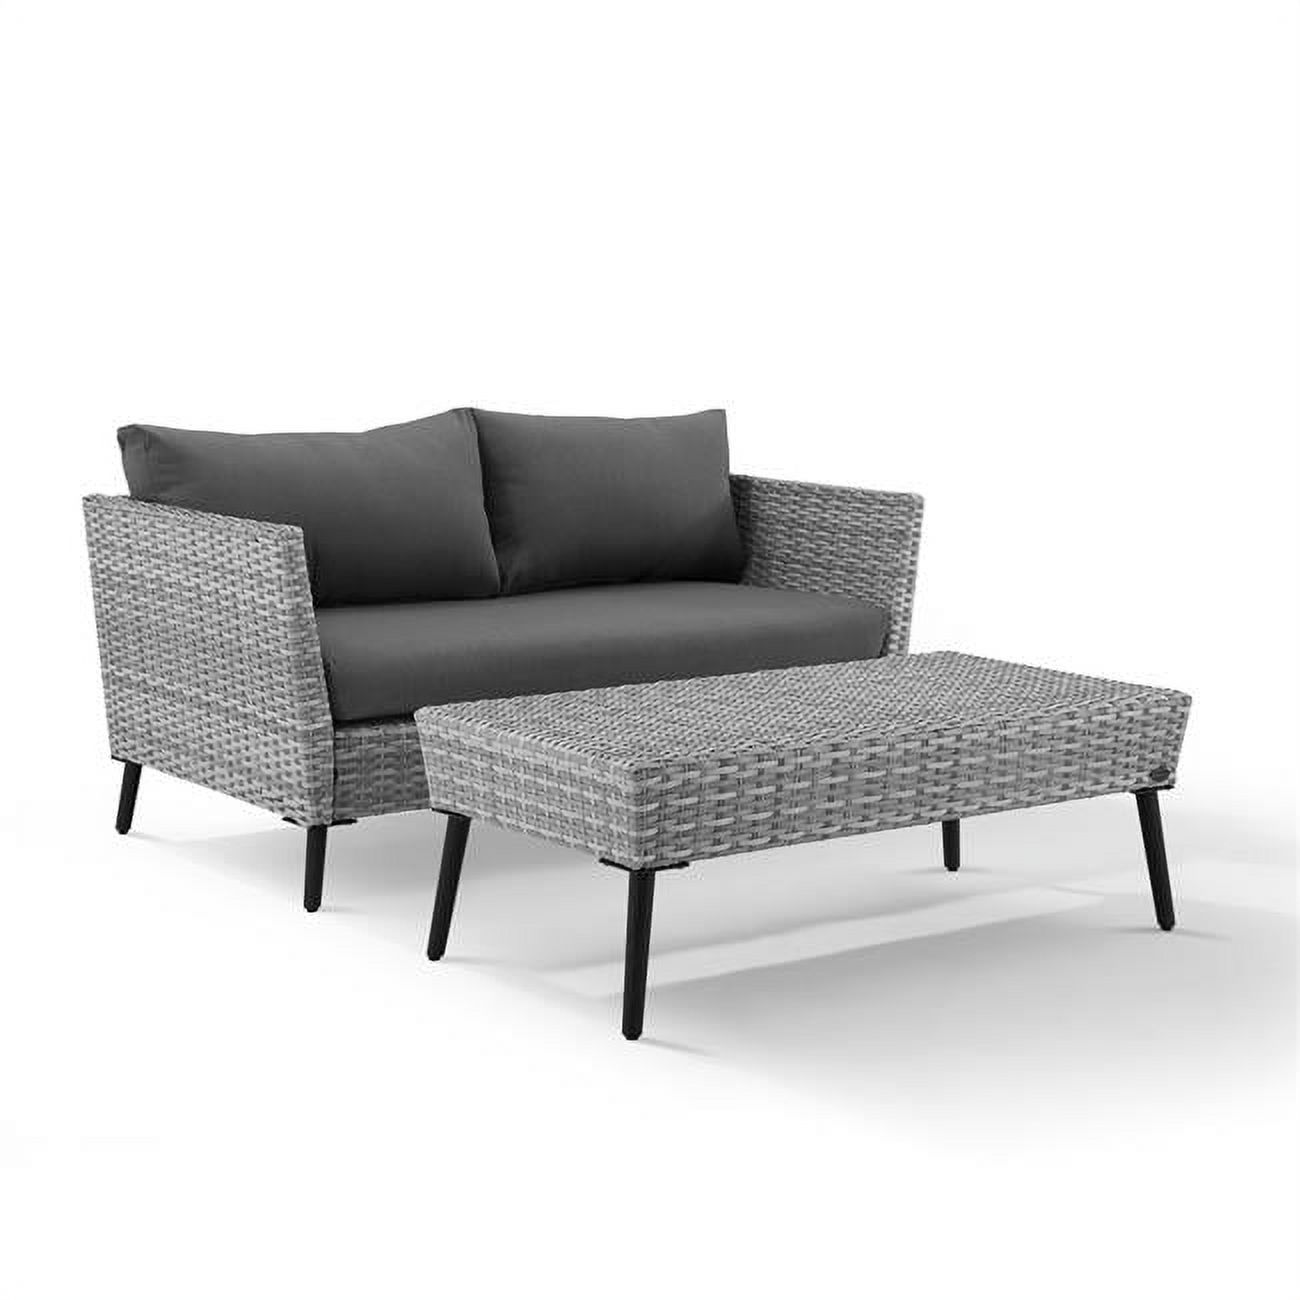 Crosley Richland 2 Piece Wicker Patio Sofa Set in Gray - image 1 of 10